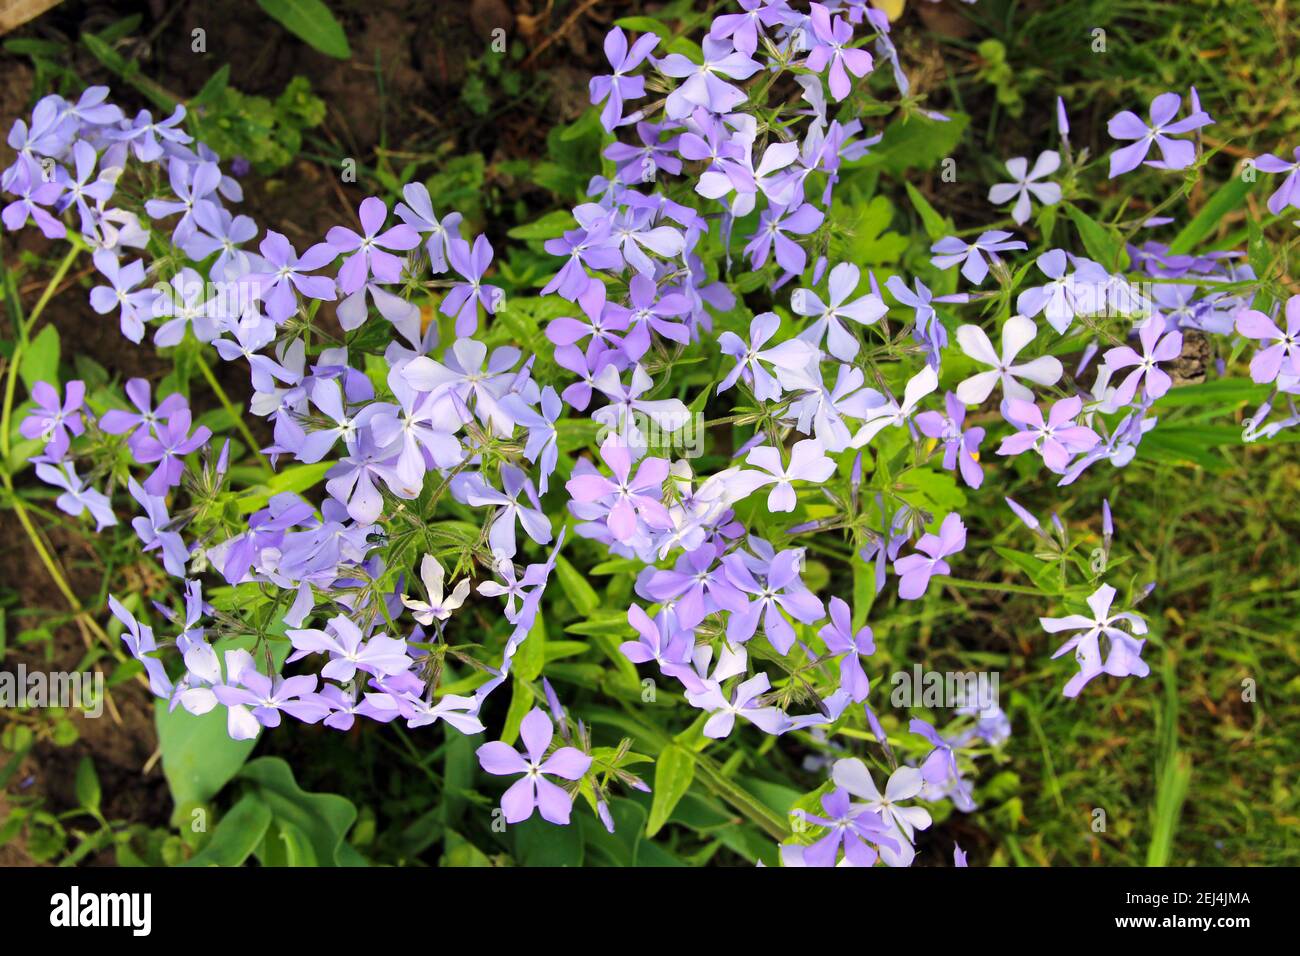 Small pale blue flowers like a little butterflies sitting on green grass. Stock Photo